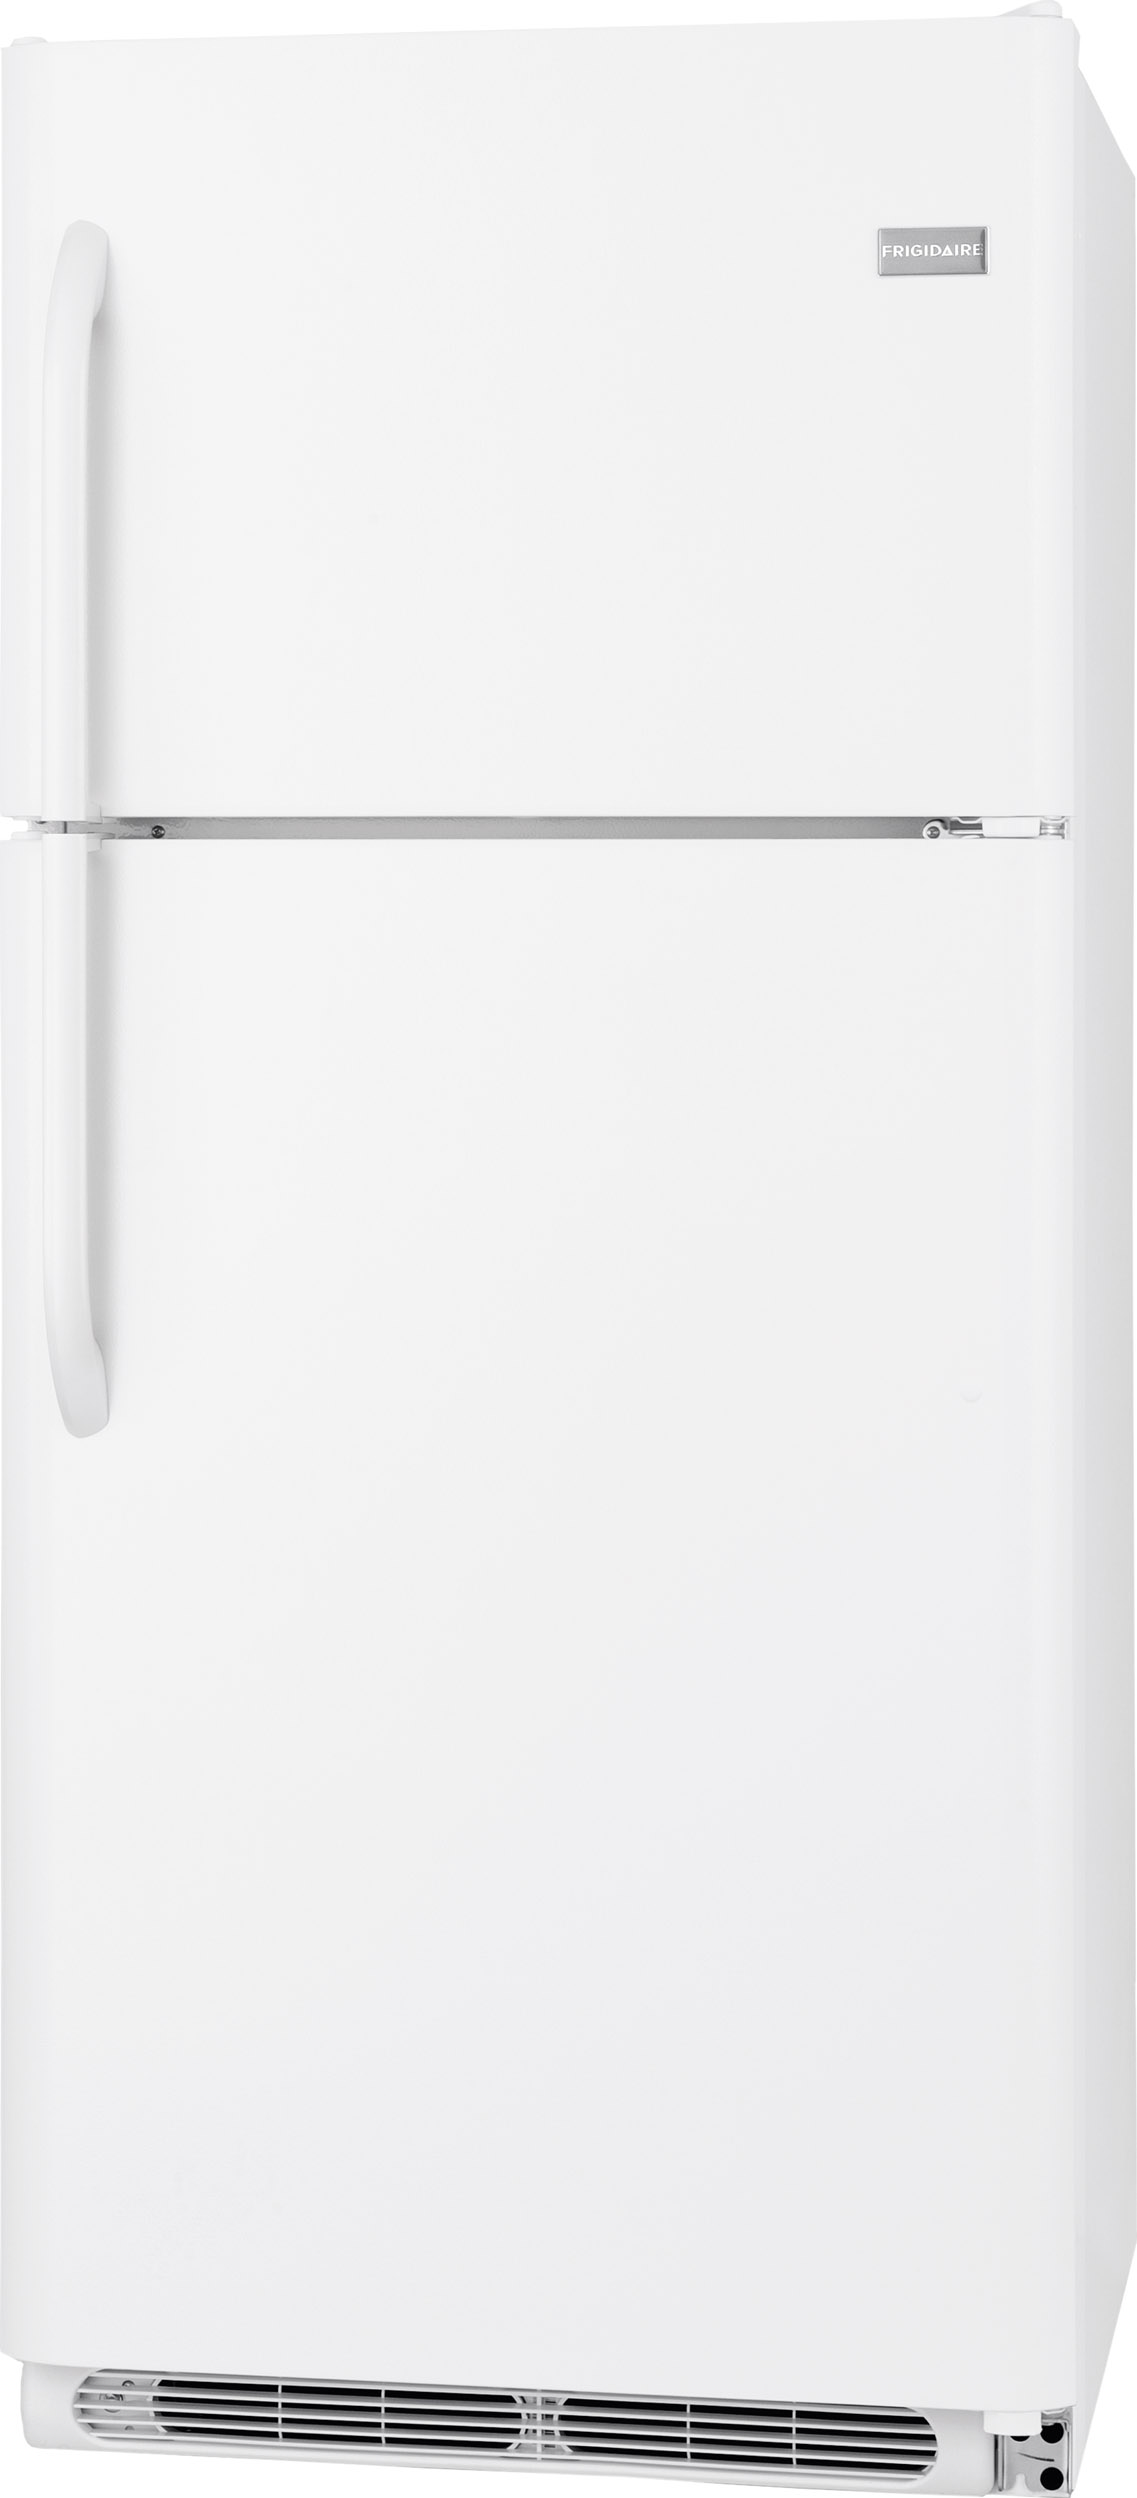 Frigidaire Refrigerator: Model FFHT2021QW0 Parts & Repair Help | Repair ...